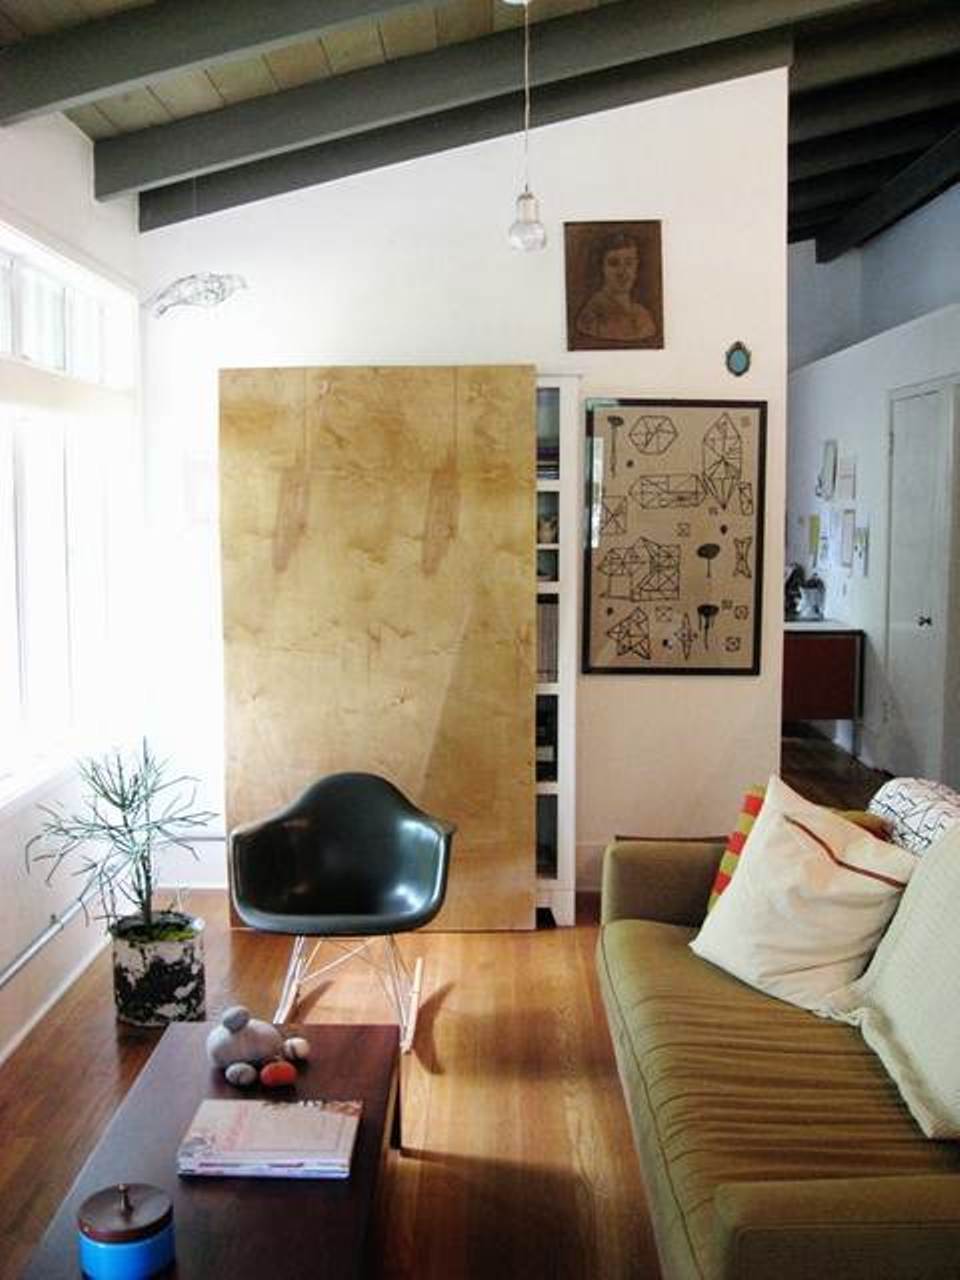 Small Apartment Decorating Ideas: Small Apartment Design and Interior ...